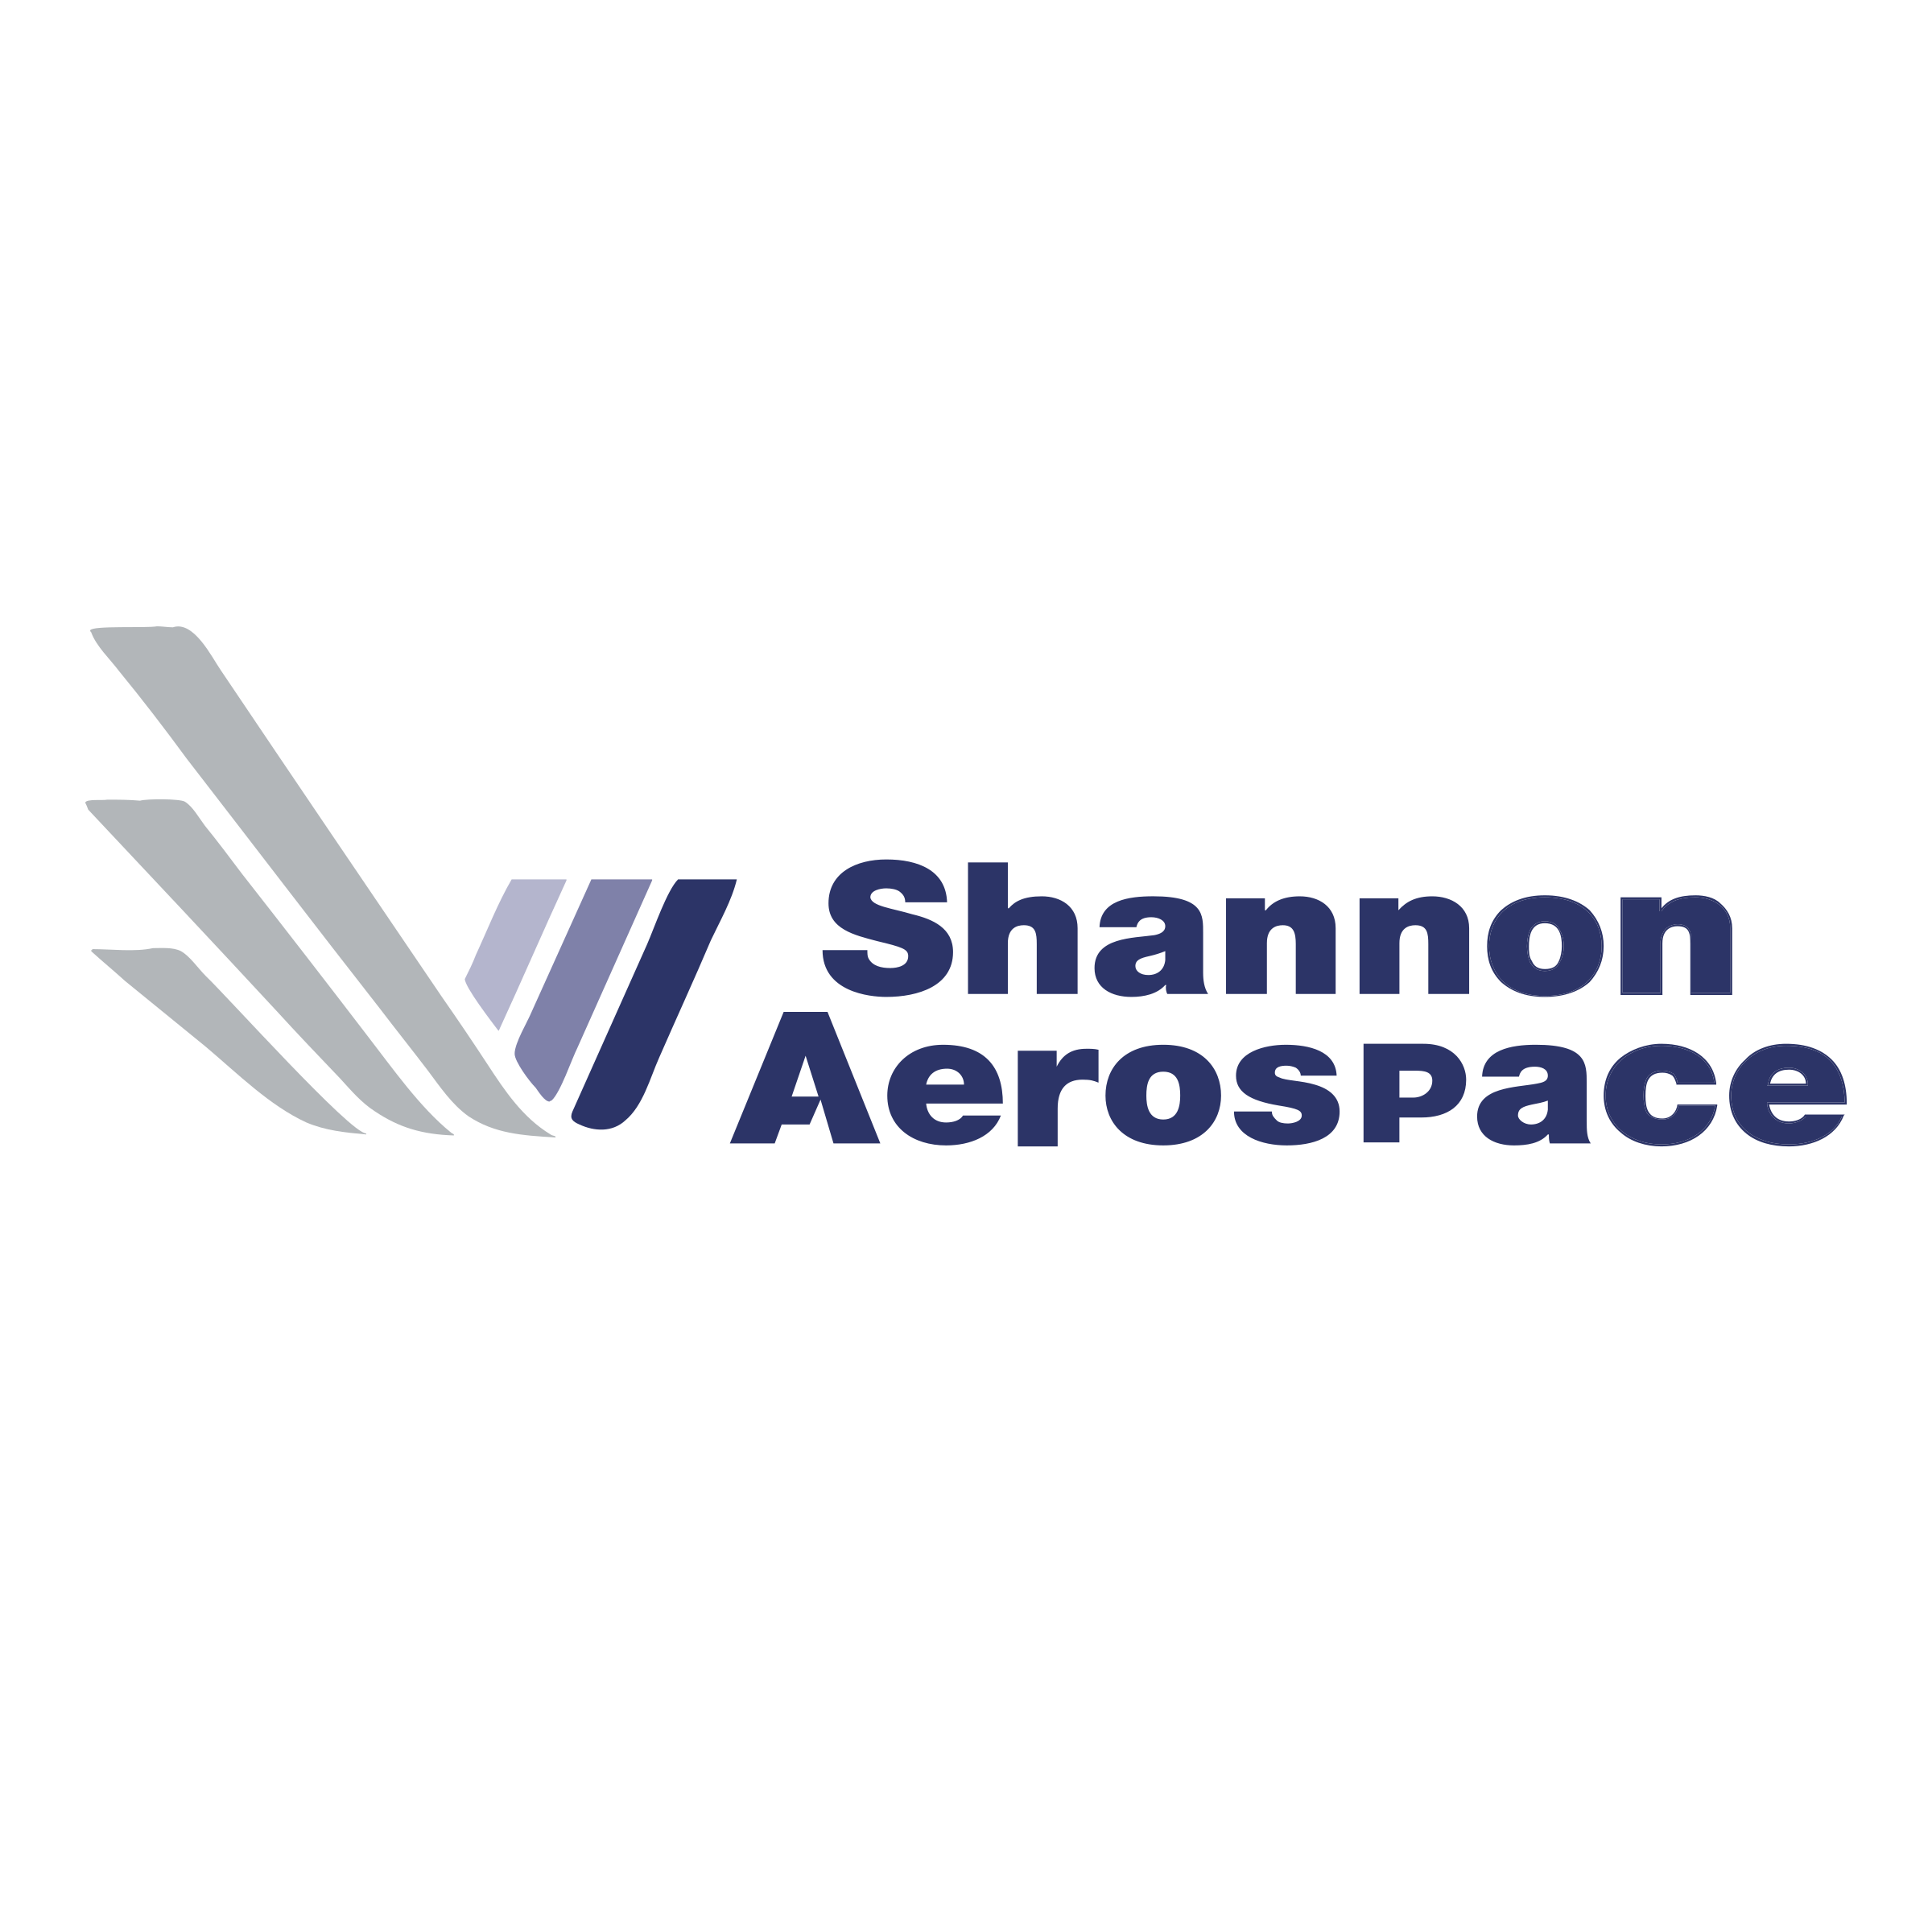 Shannon Logo - Shannon Aerospace Logo PNG Transparent & SVG Vector